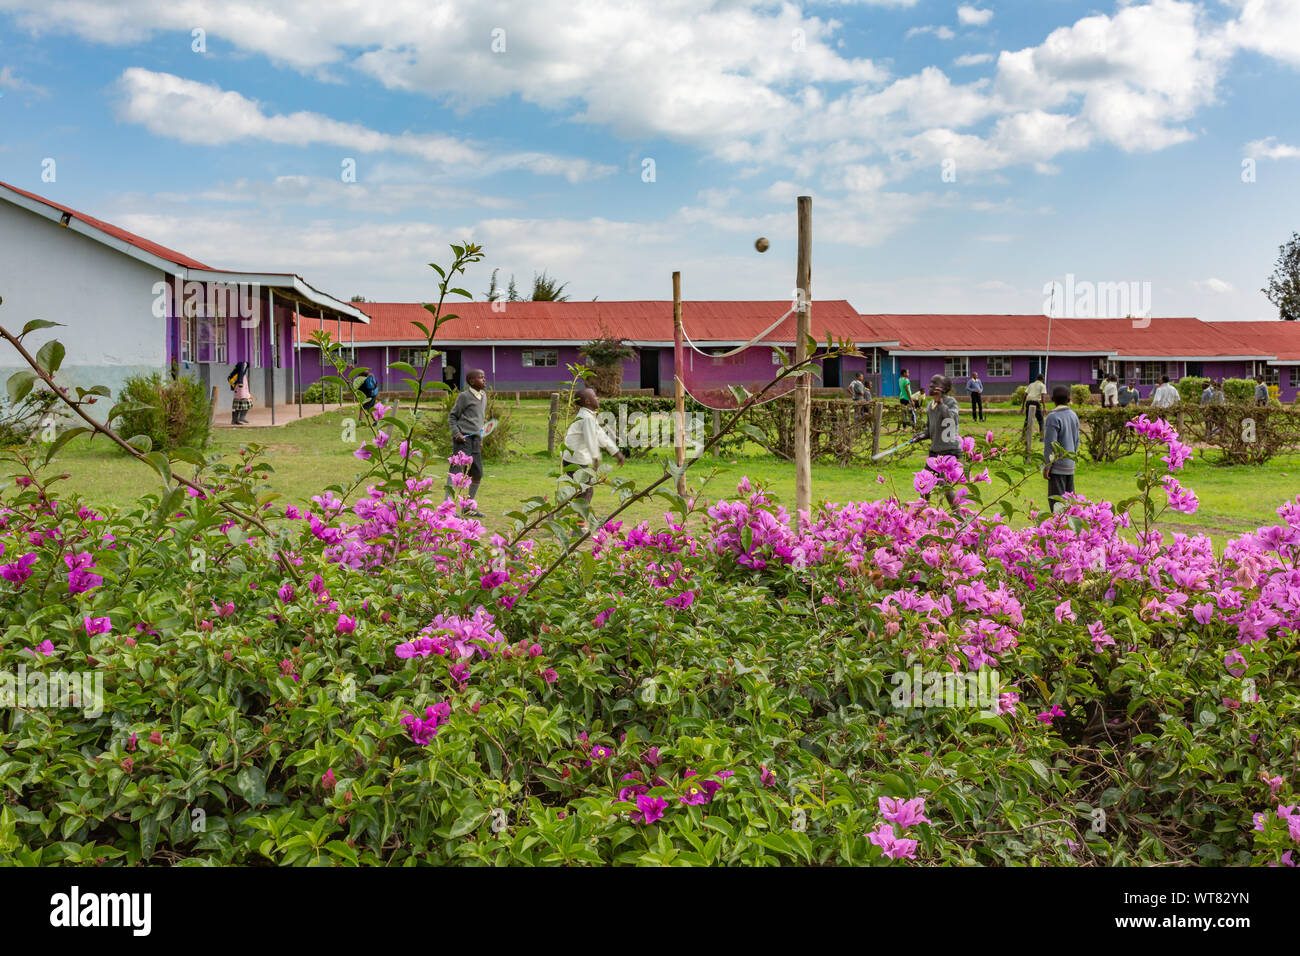 Imani Junior Academy, Nanyuki, Laikipia county, Kenya – June 13th, 2019: Candid photograph of young school children playing volleyball in field at Ima Stock Photo